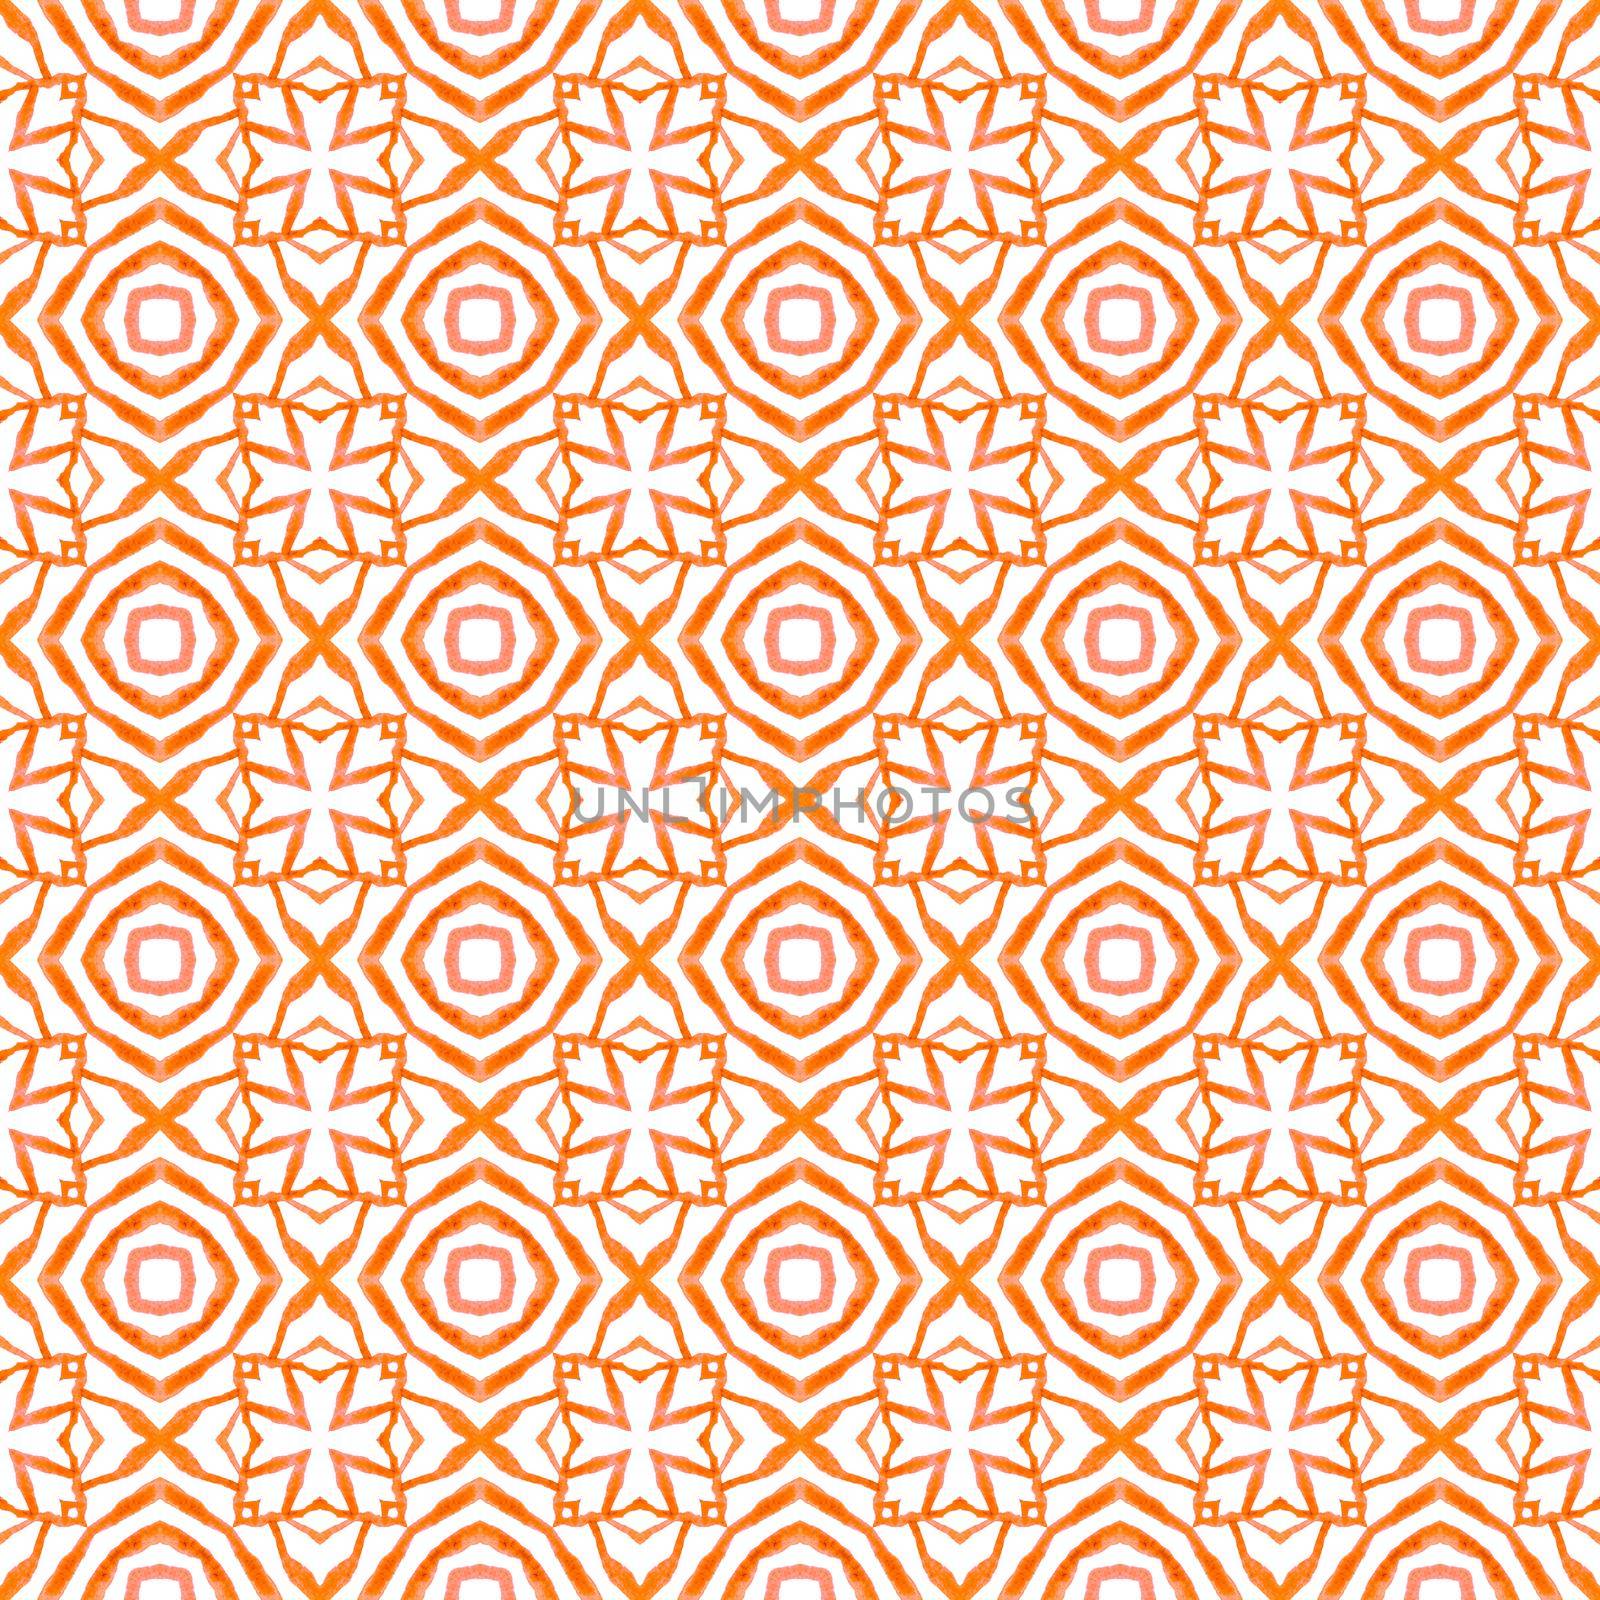 Textile ready eminent print, swimwear fabric, wallpaper, wrapping. Orange imaginative boho chic summer design. Trendy organic green border. Organic tile.